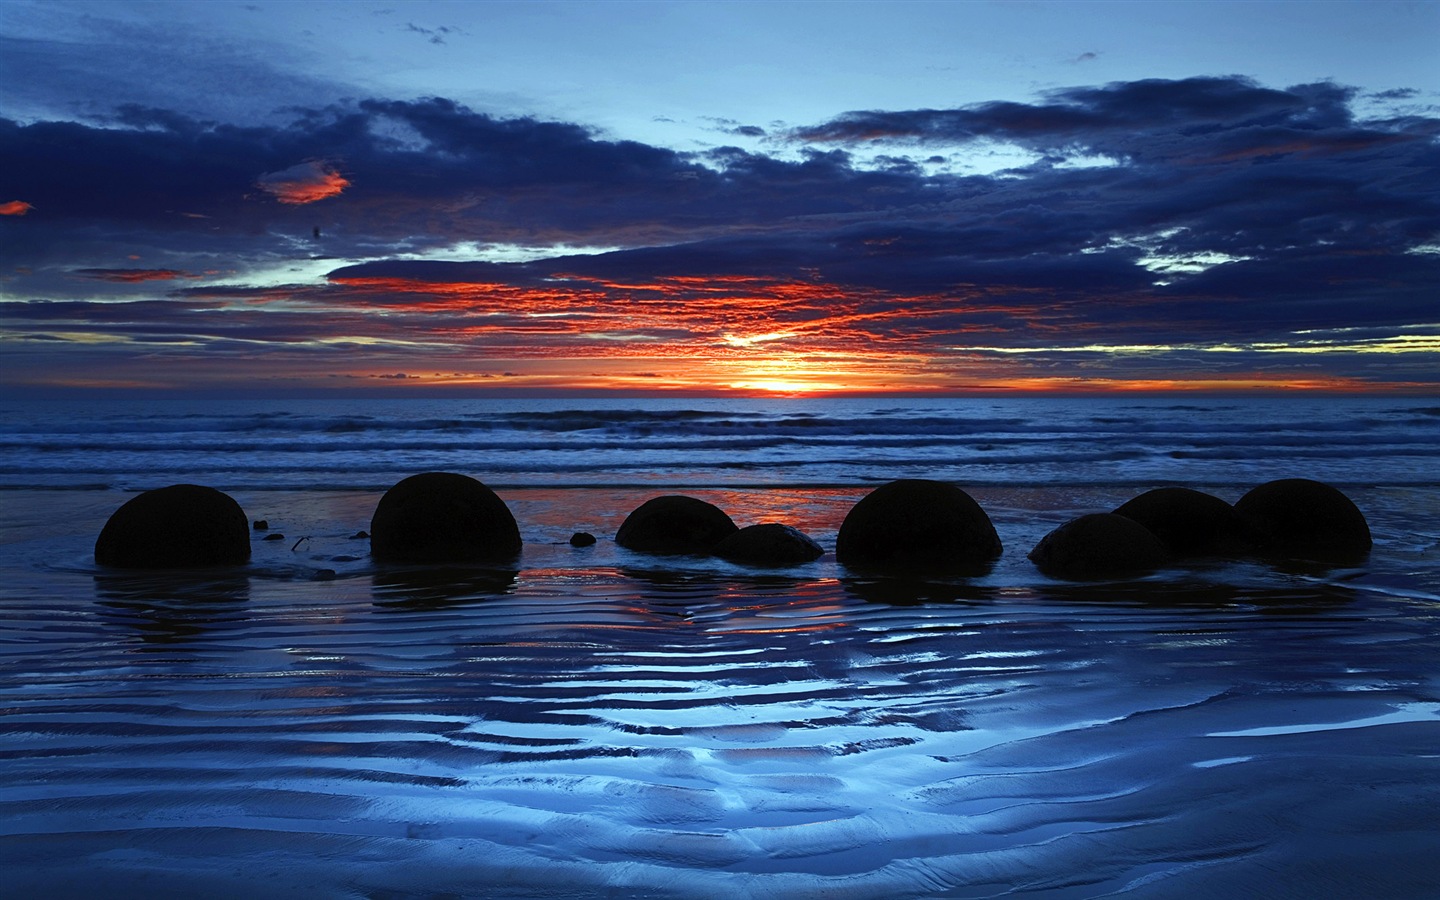 Windows 8 theme wallpaper: Beach sunrise and sunset views #14 - 1440x900